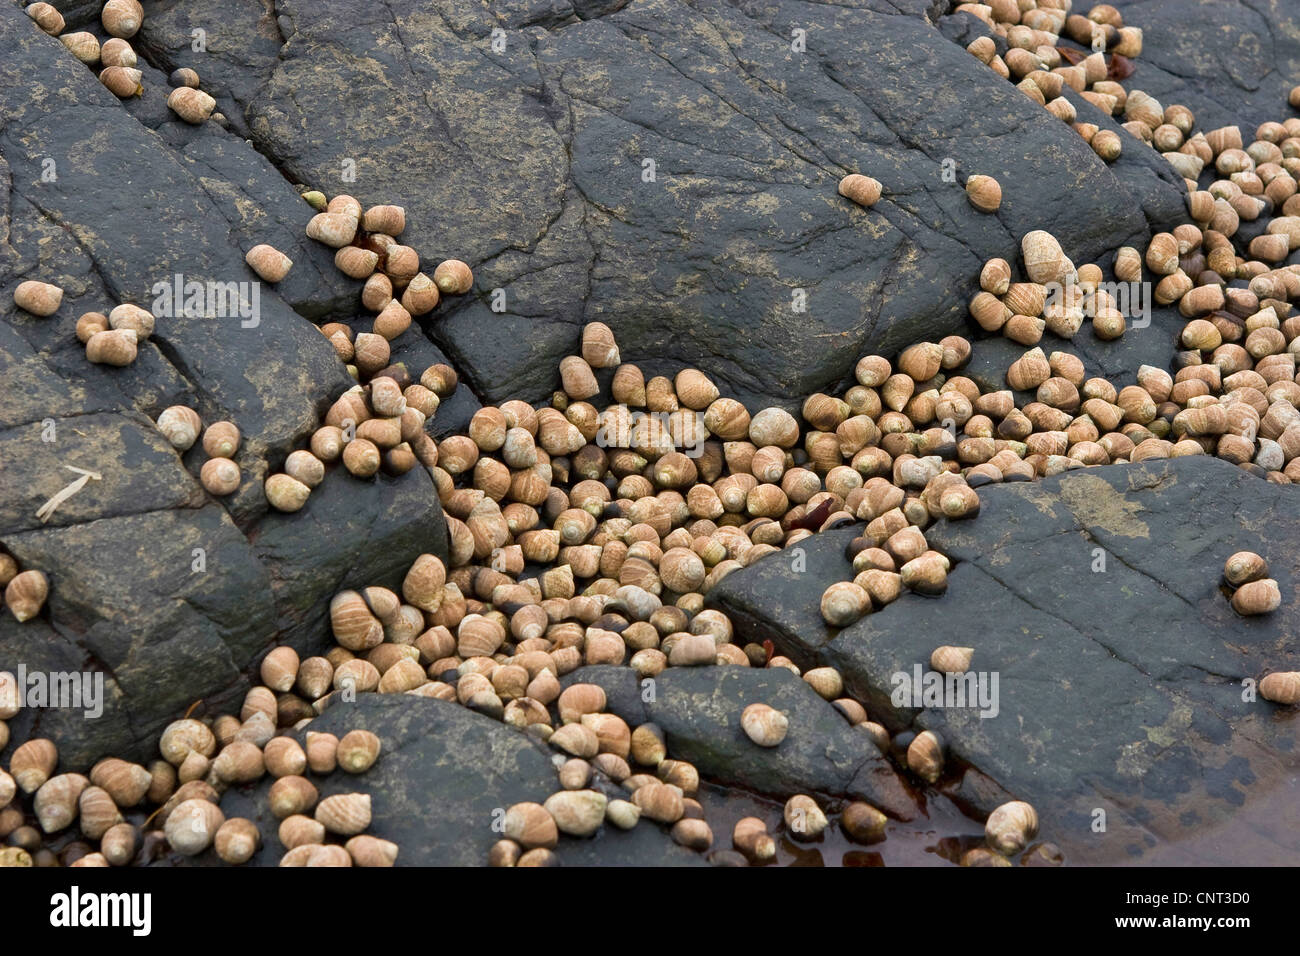 common periwinkle, common winkle, edible winkle (Littorina littorea), at low tide on coast rocks Stock Photo